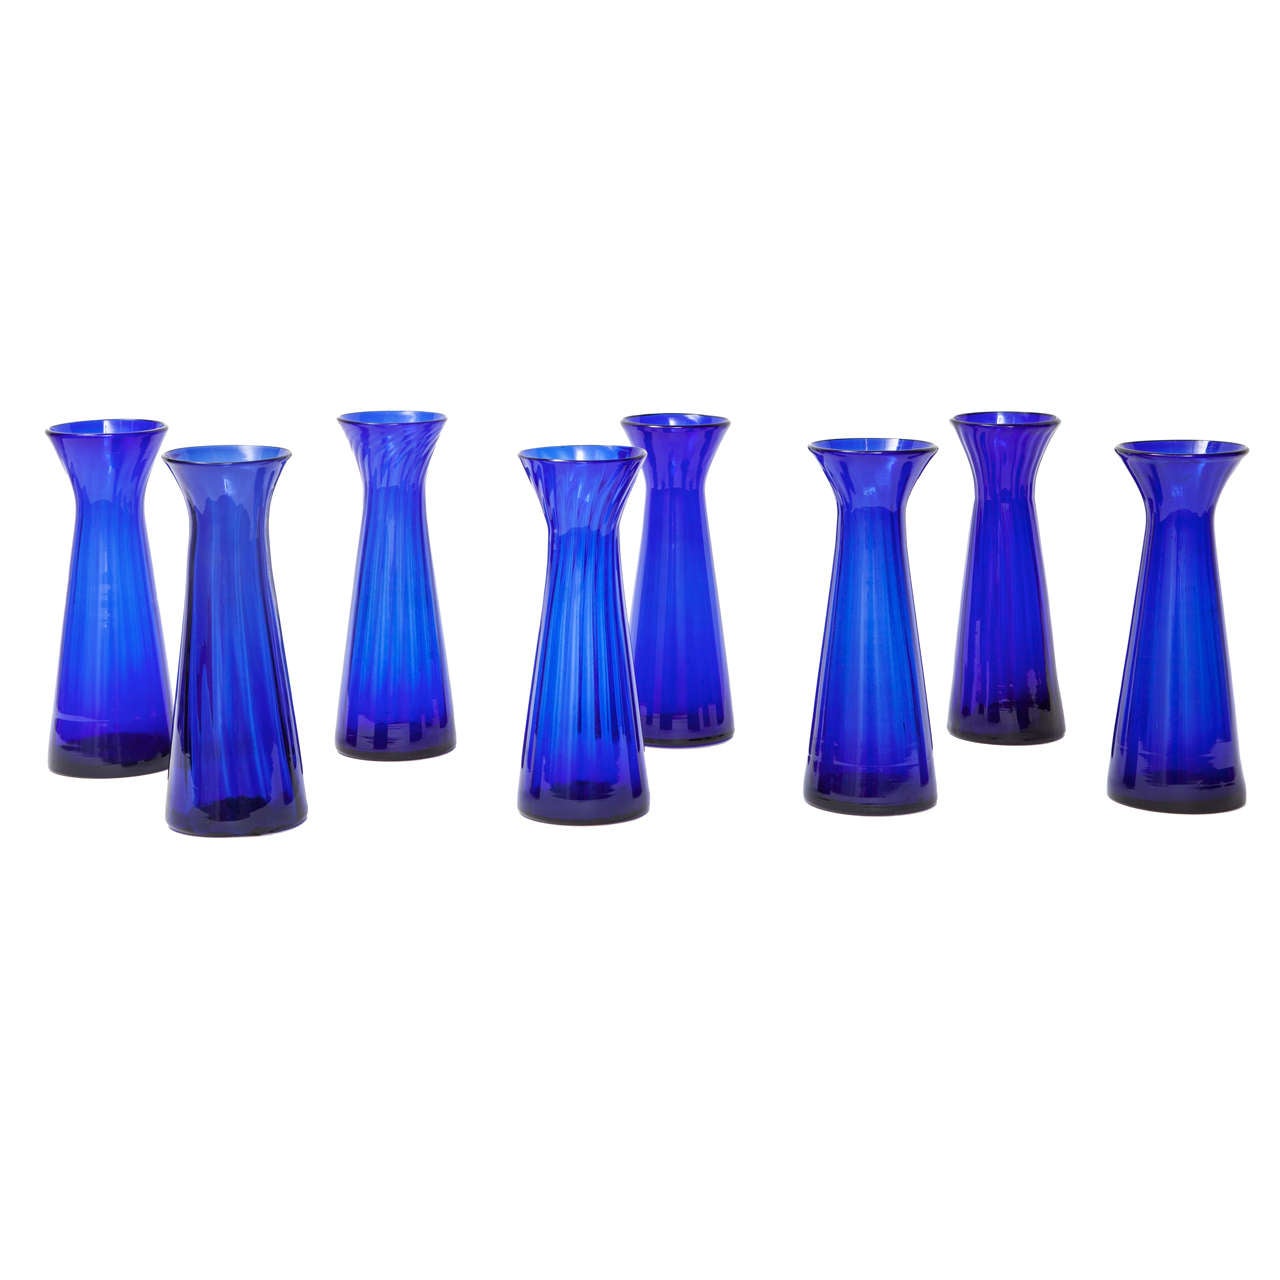 Vases à hyacinthe danois bleu cobalt